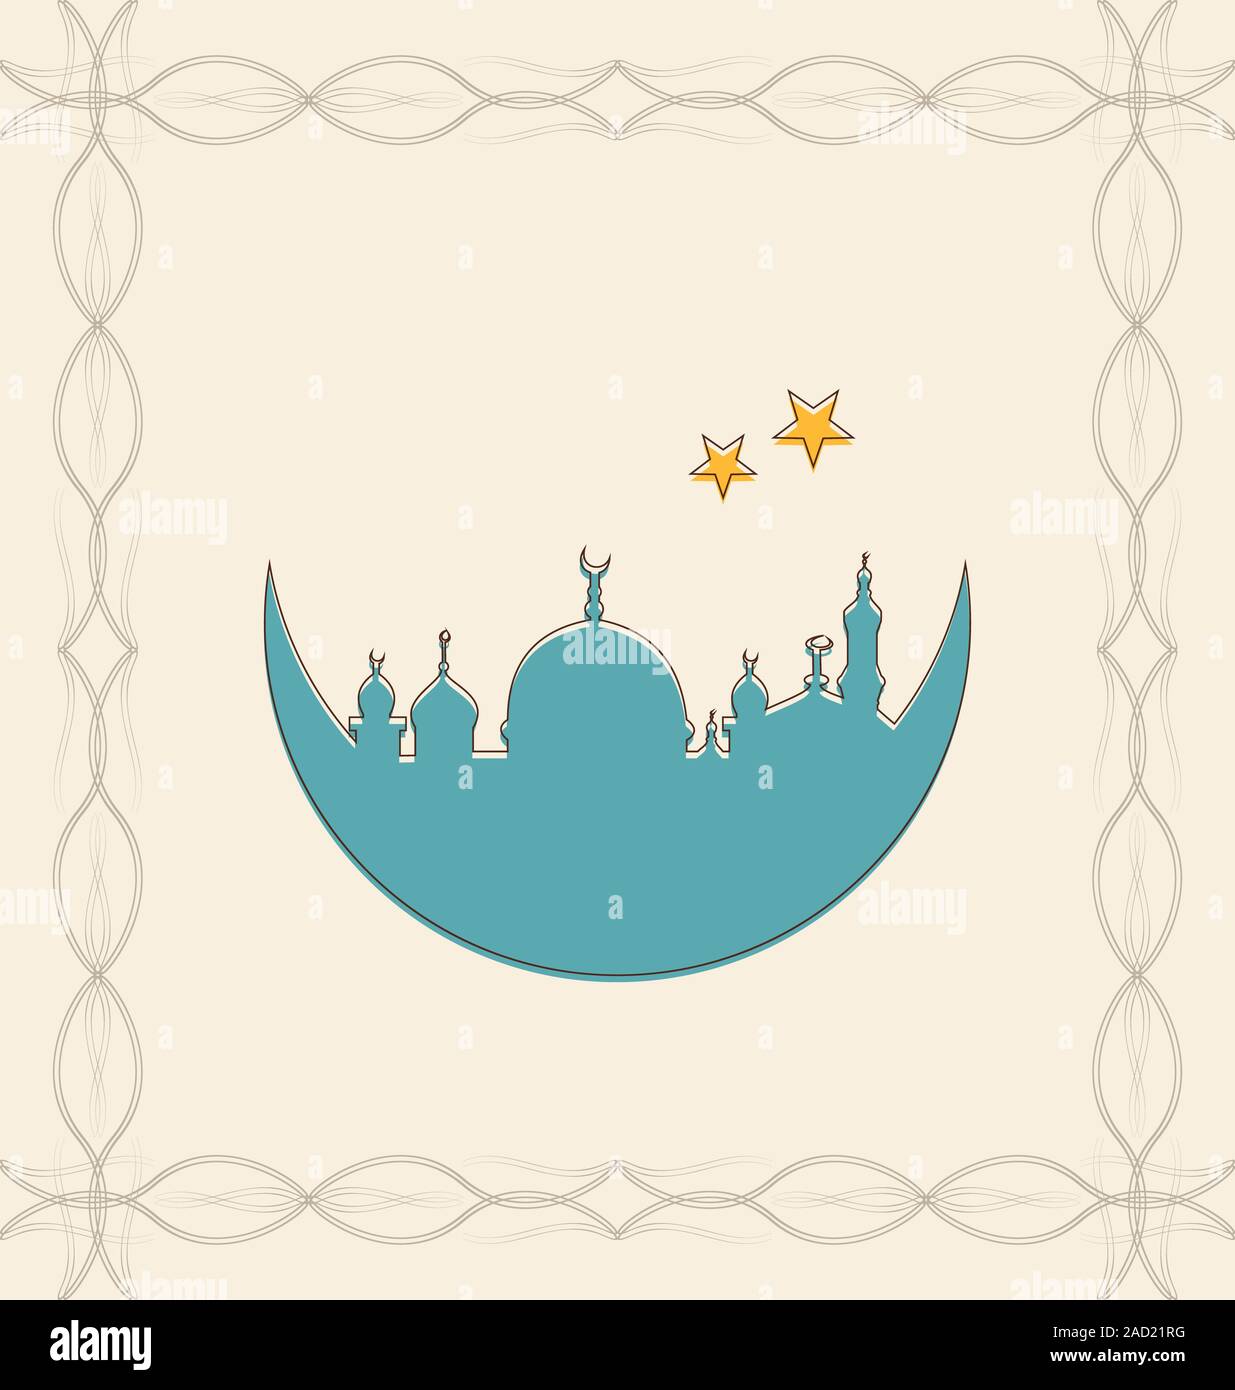 Islamic Card for Ramadan Kareem Stock Photo